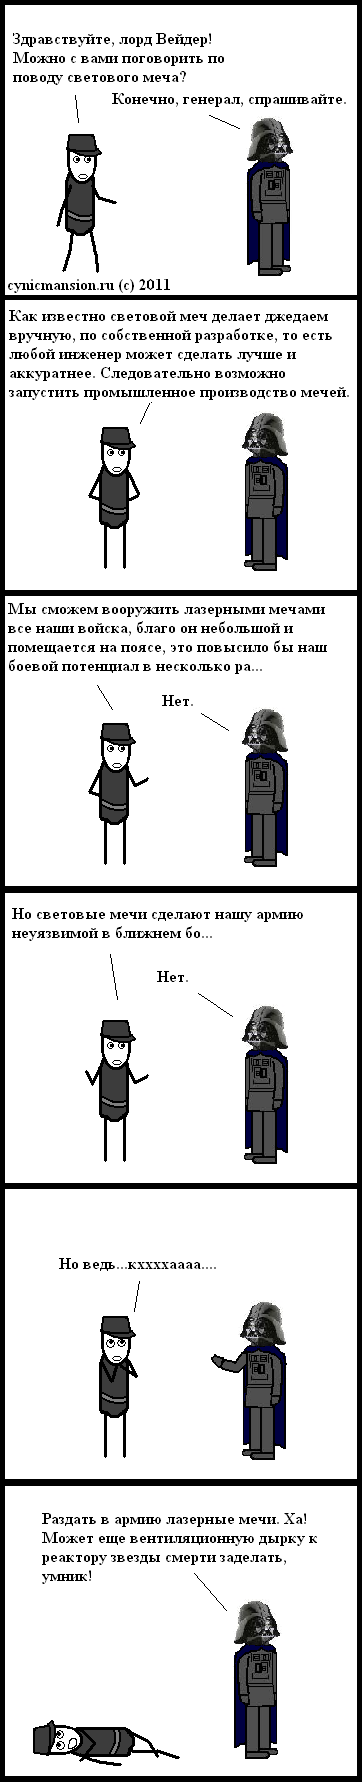 http://cynicmansion.ru/images/comics/swfun3.PNG